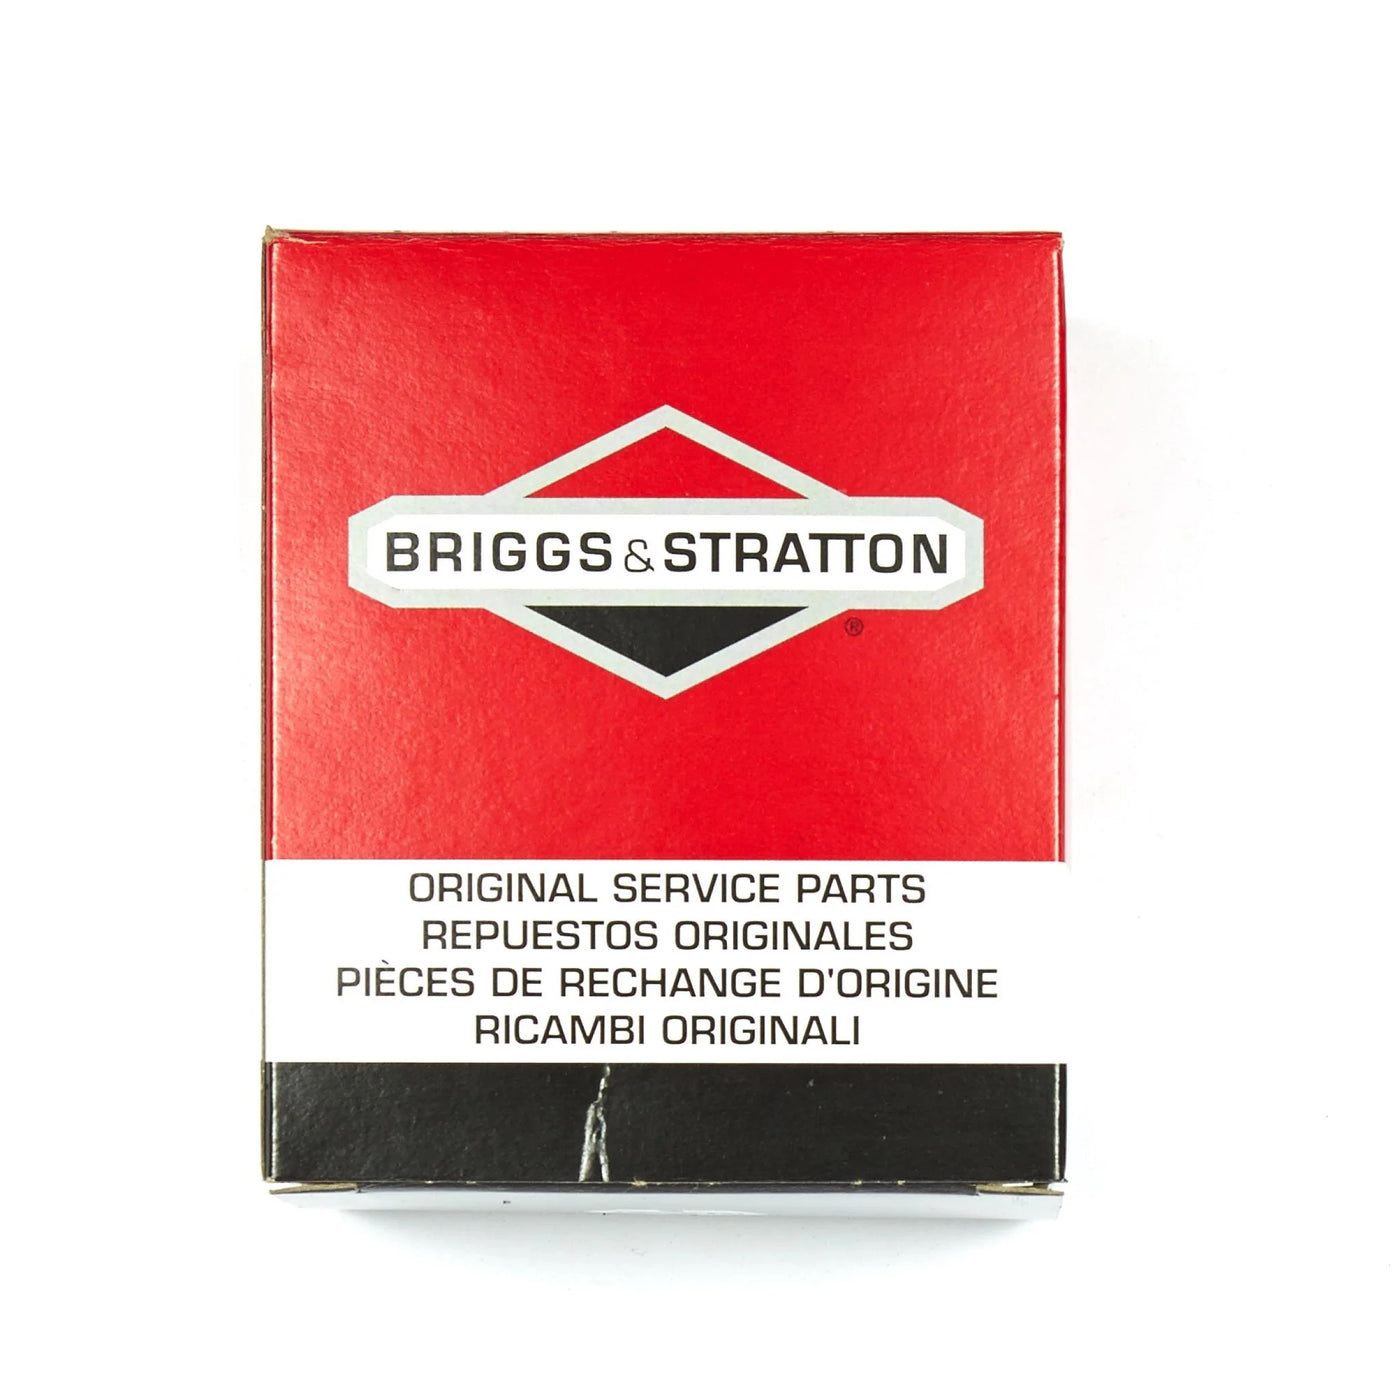 Briggs & Stratton 1/4" Line Fuel Filter 845125